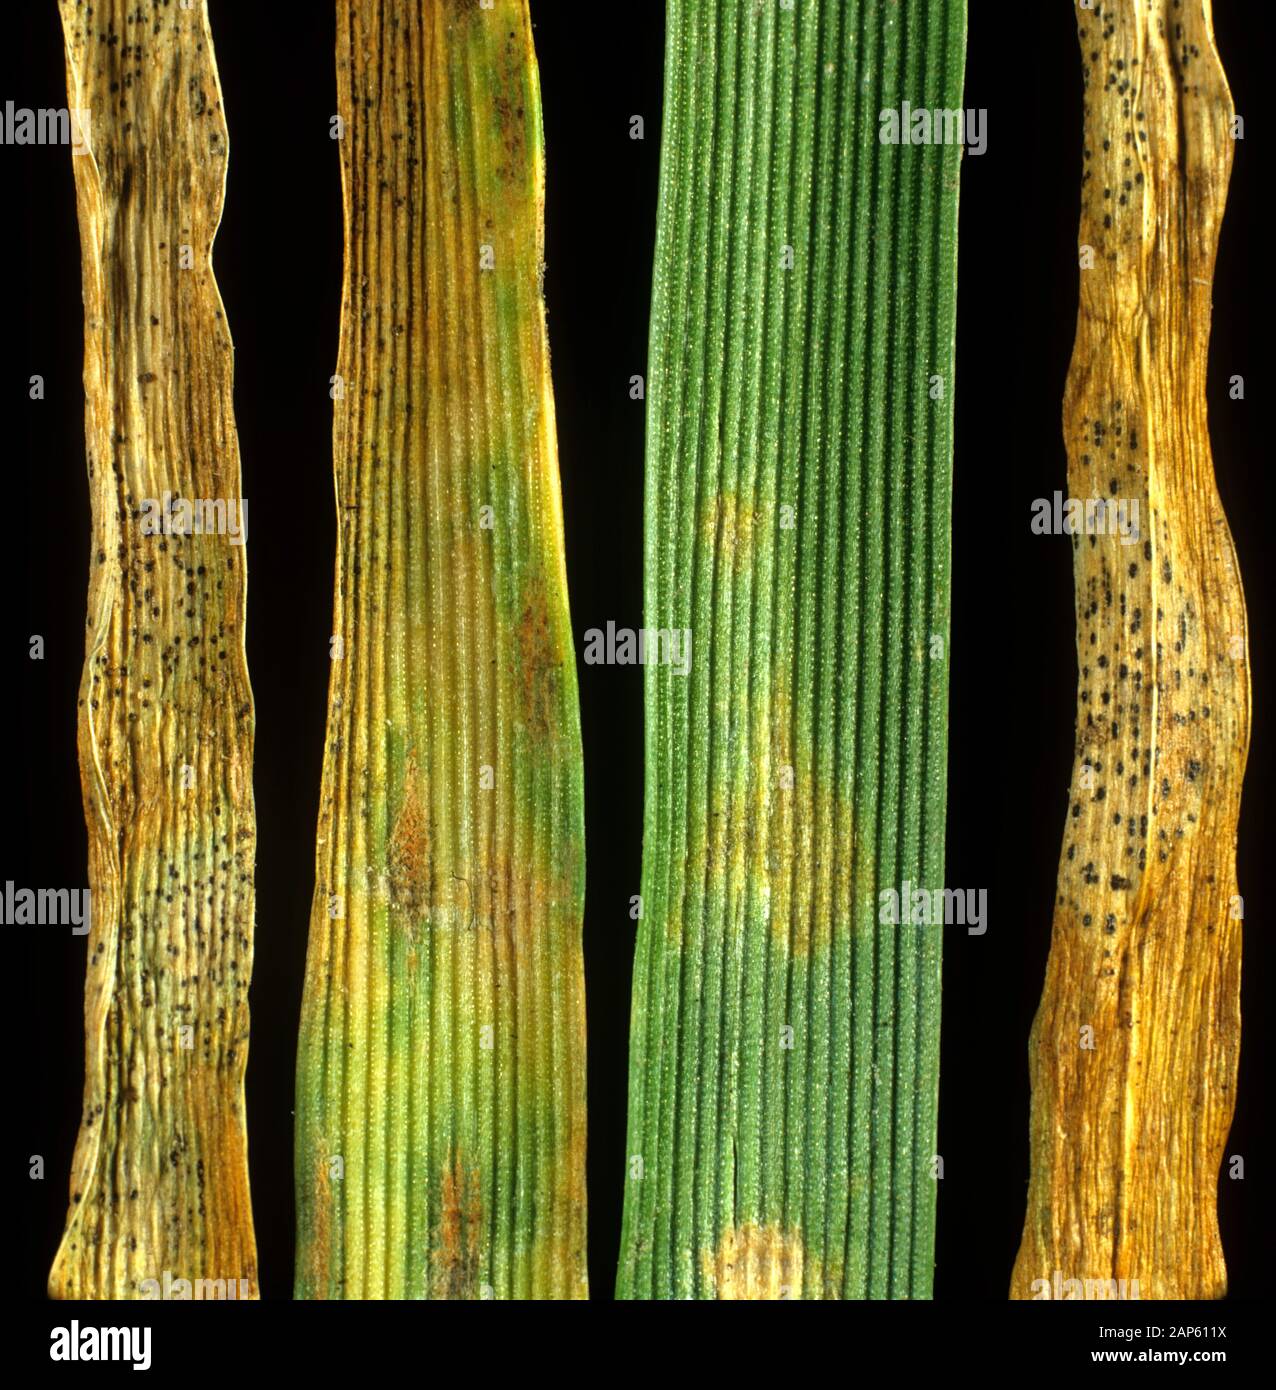 Septoria leaf blotch (Zymoseptoria tritici) lesions of fungal disease with pycnidia on wheat leaves Stock Photo